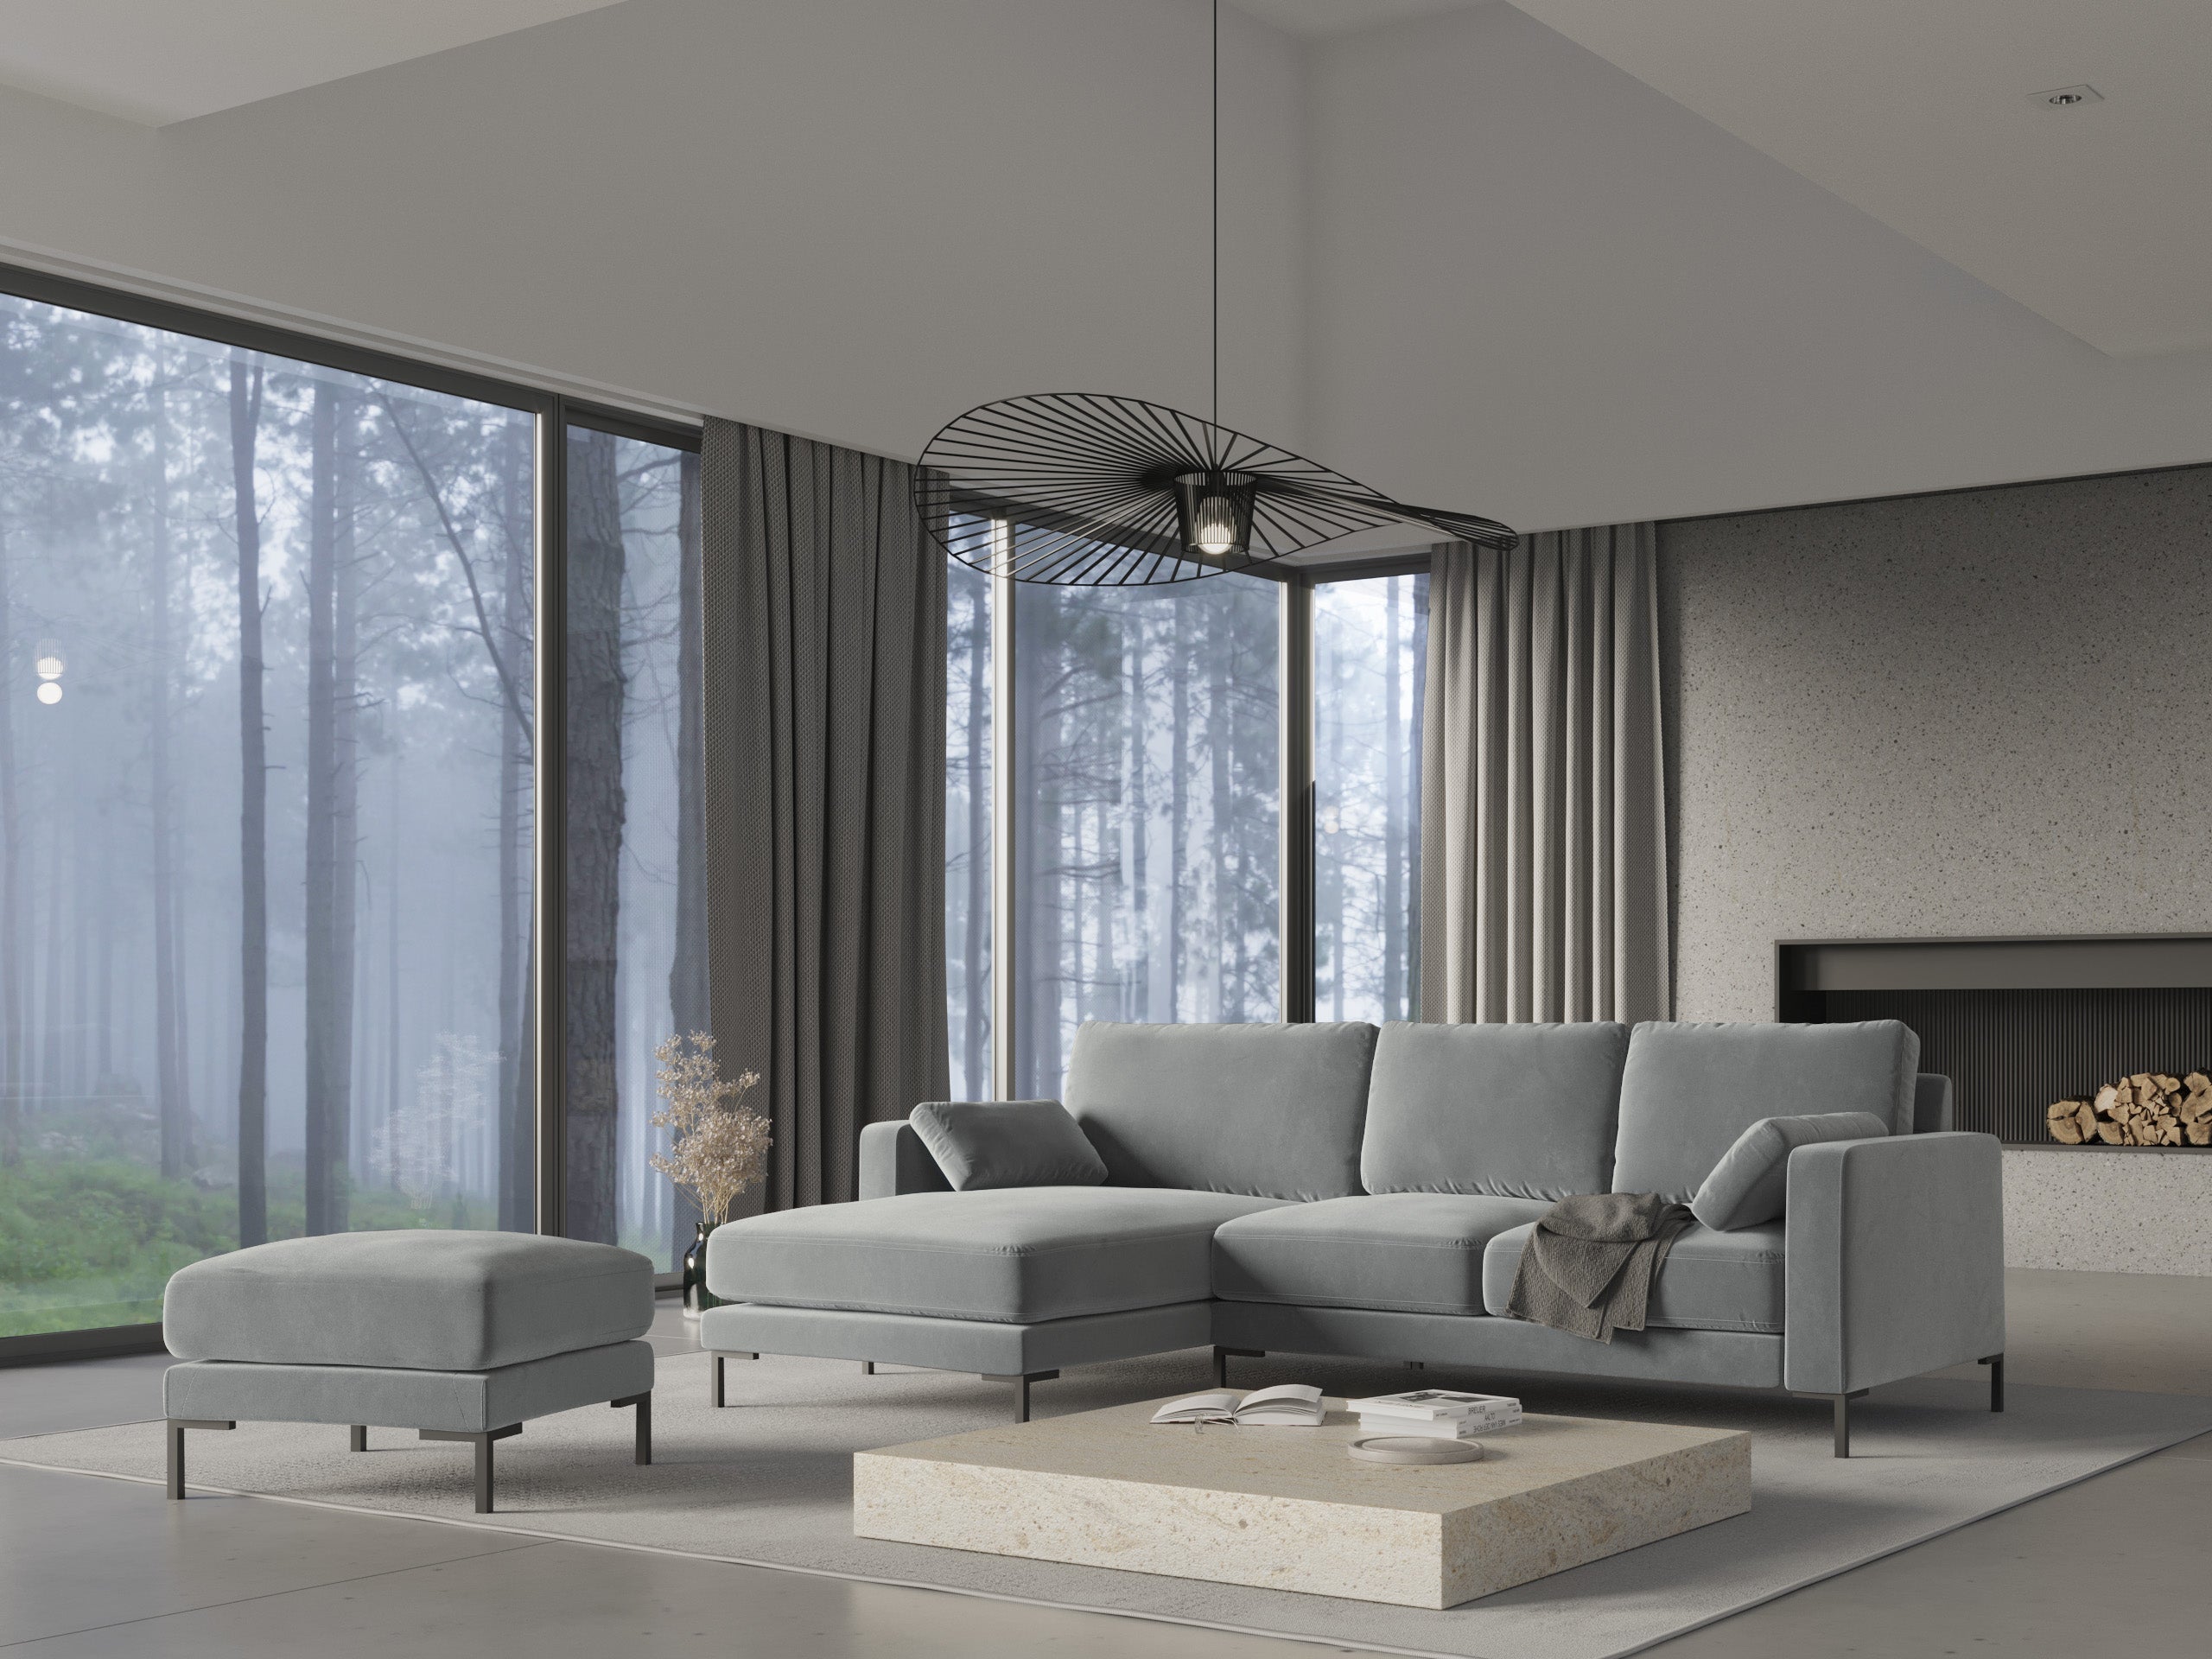 Gray corner for a modern interior